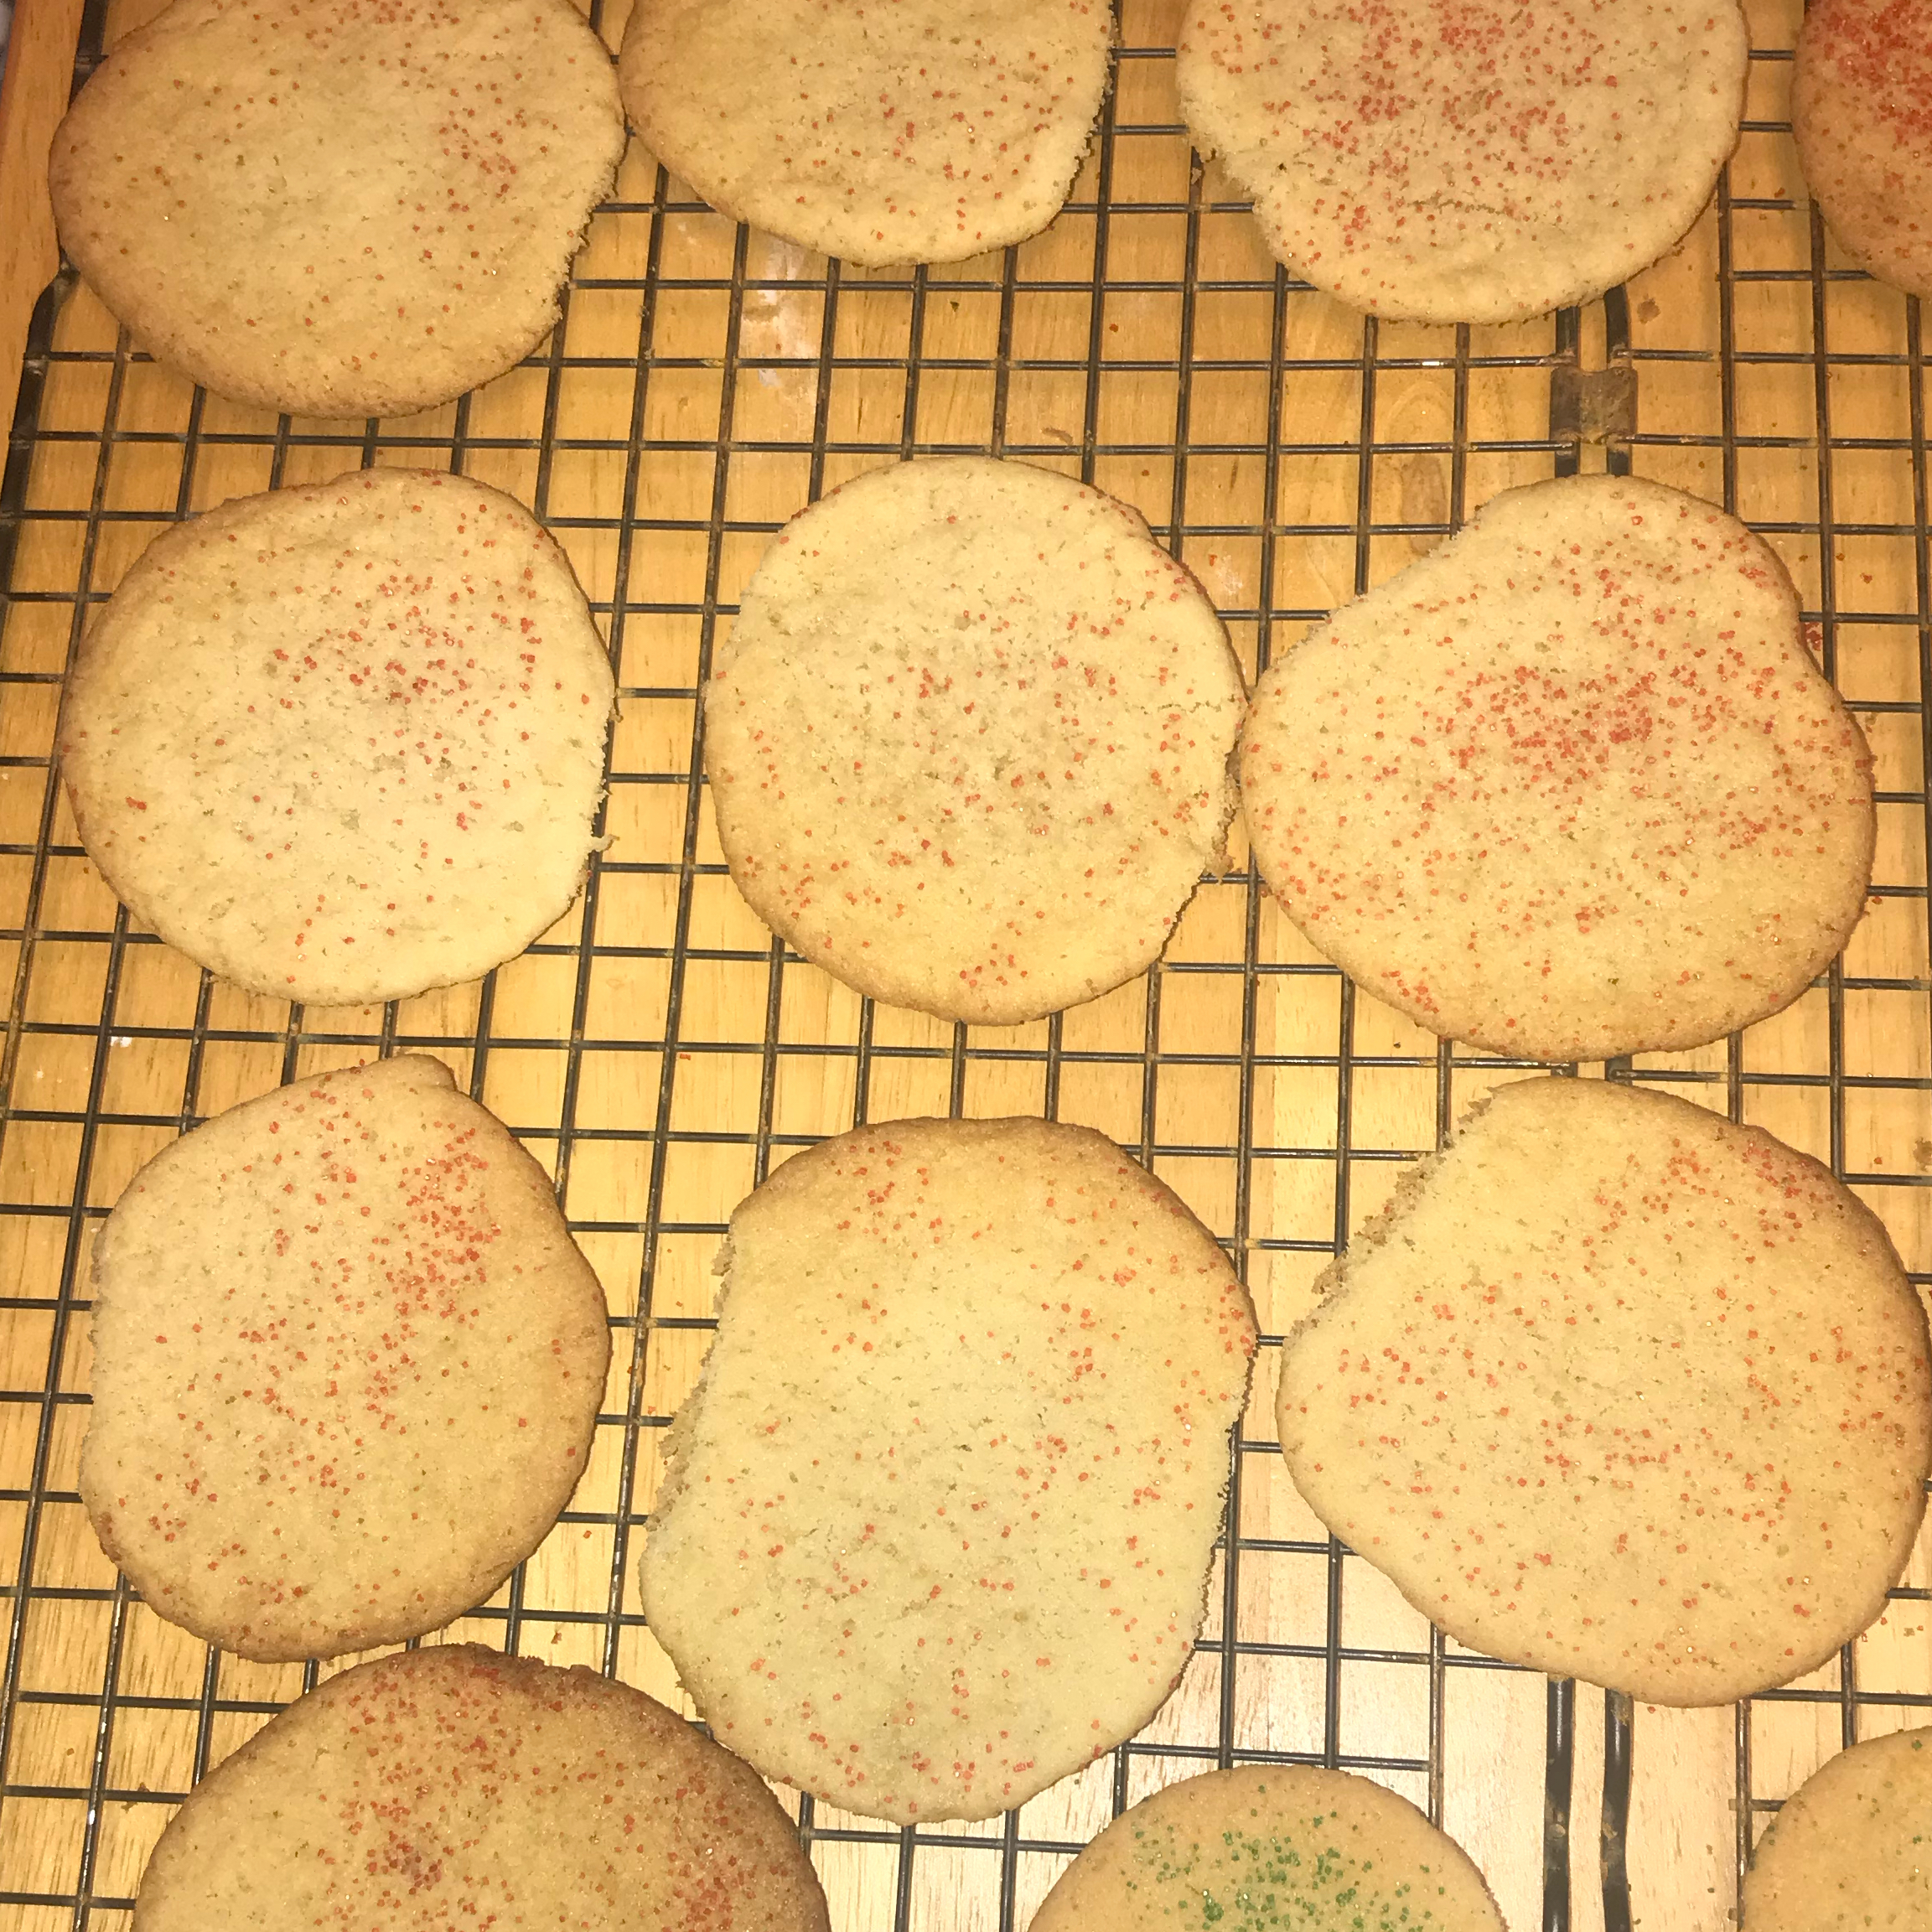 Muz's Drop Sugar Cookies 